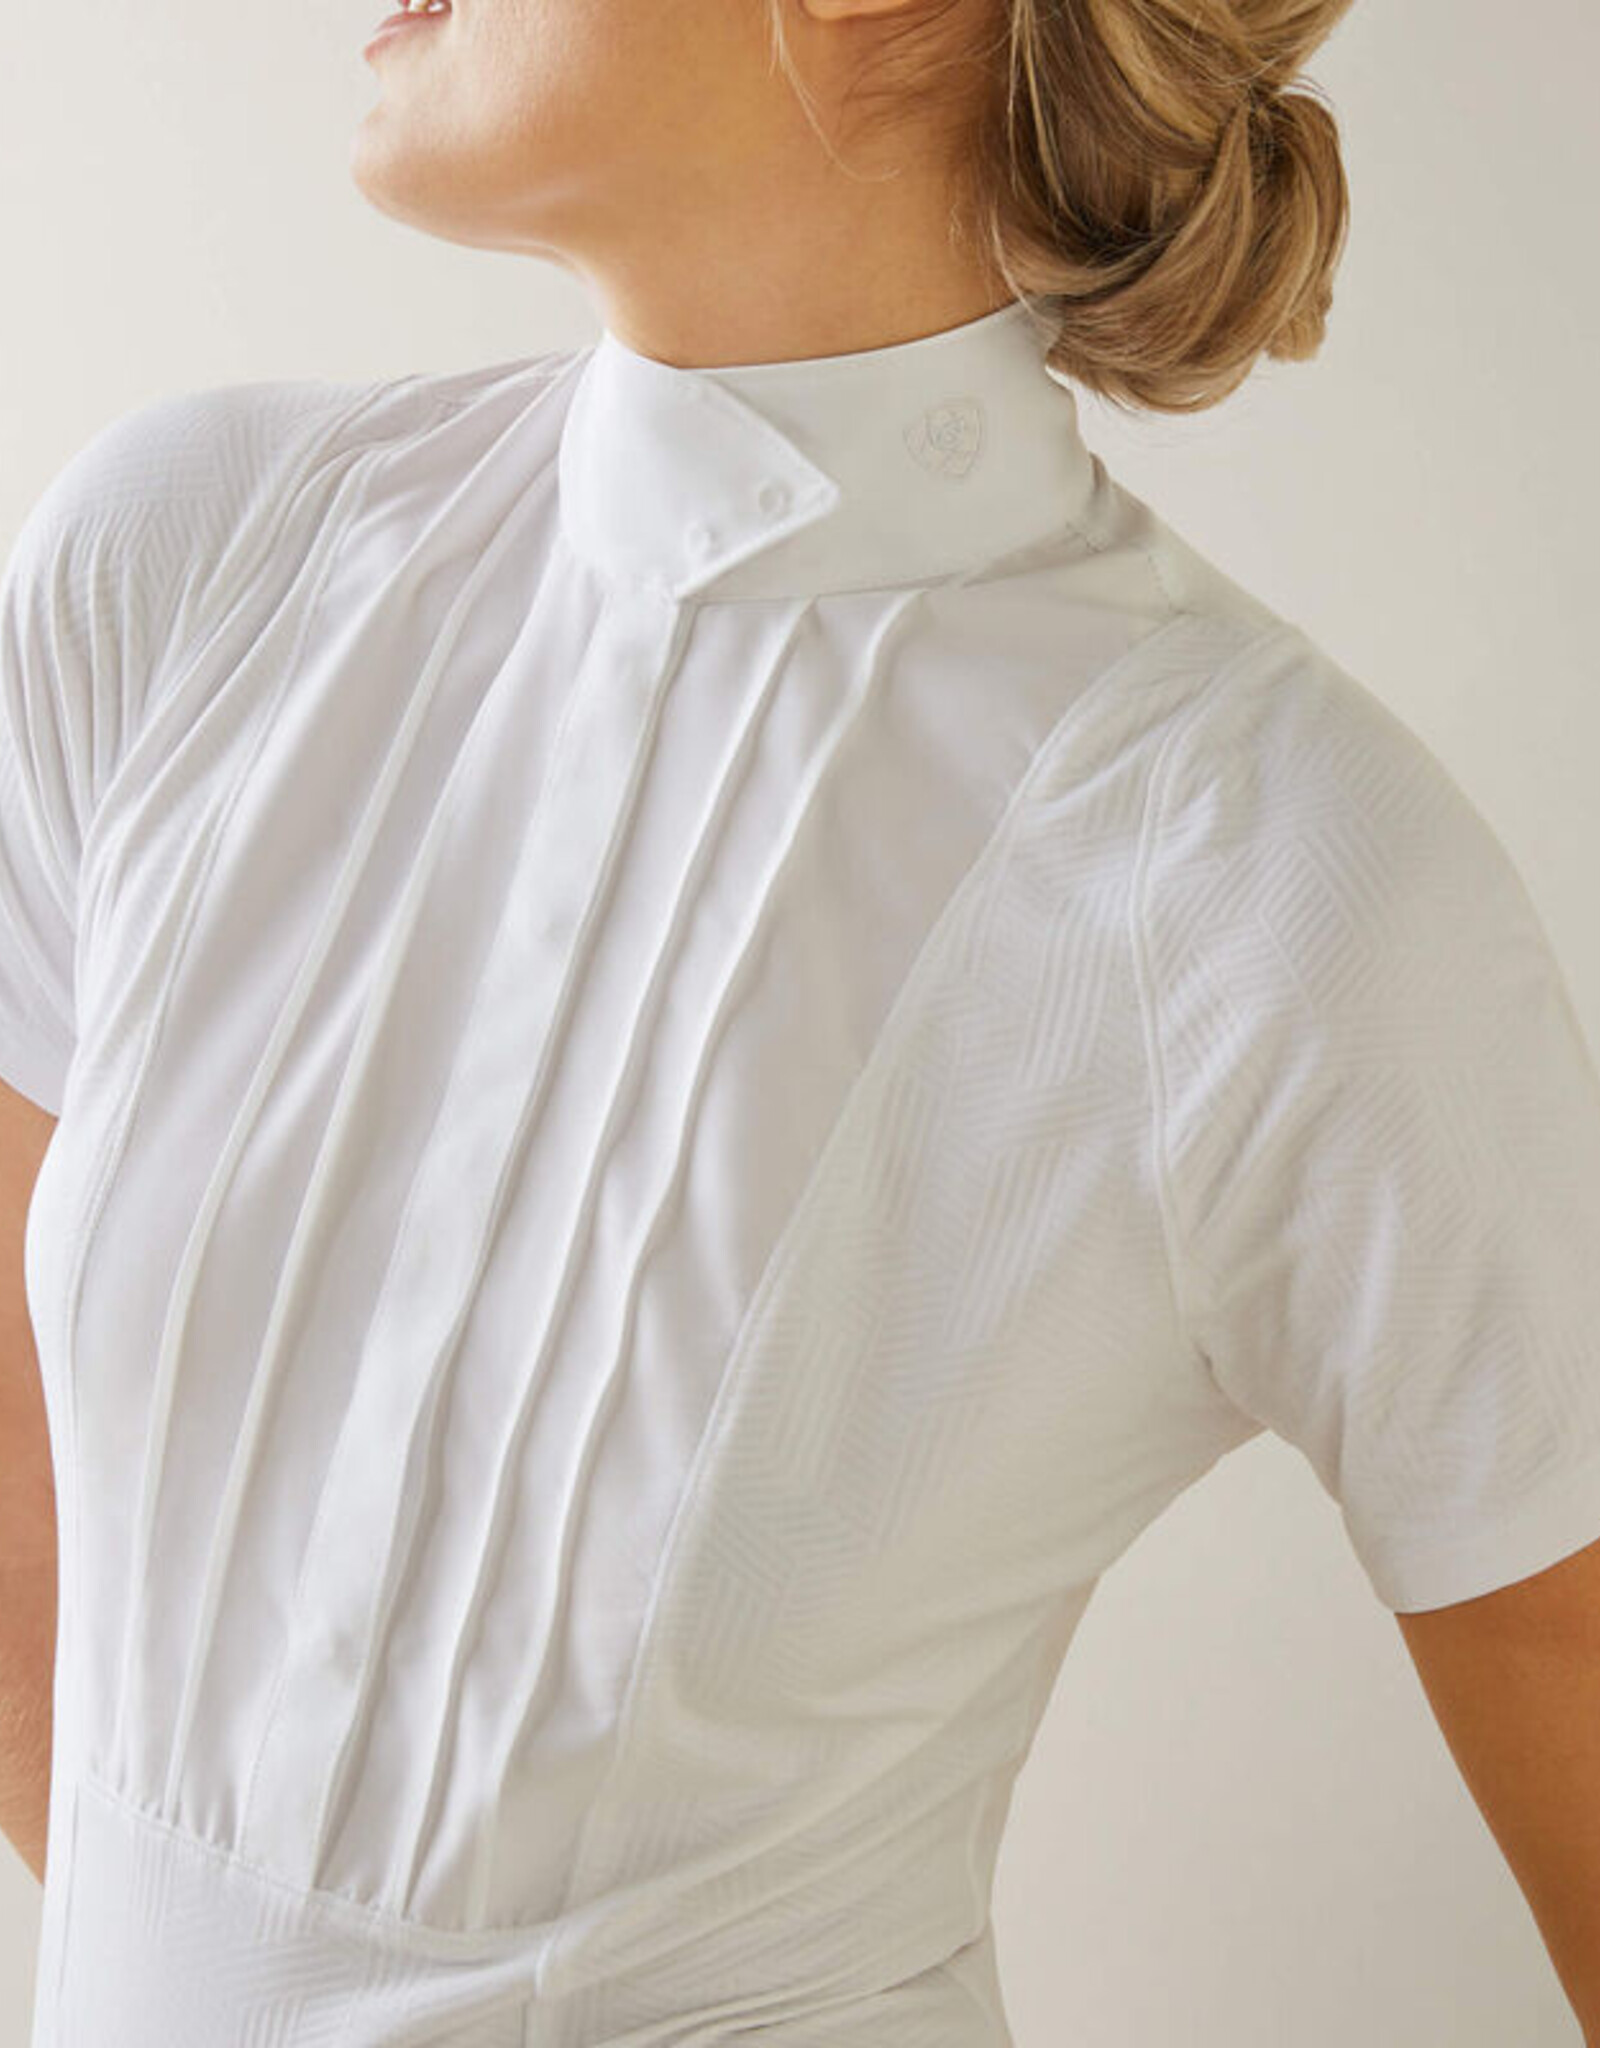 Ariat Ladies' Luxe Short Sleeve Show Shirt